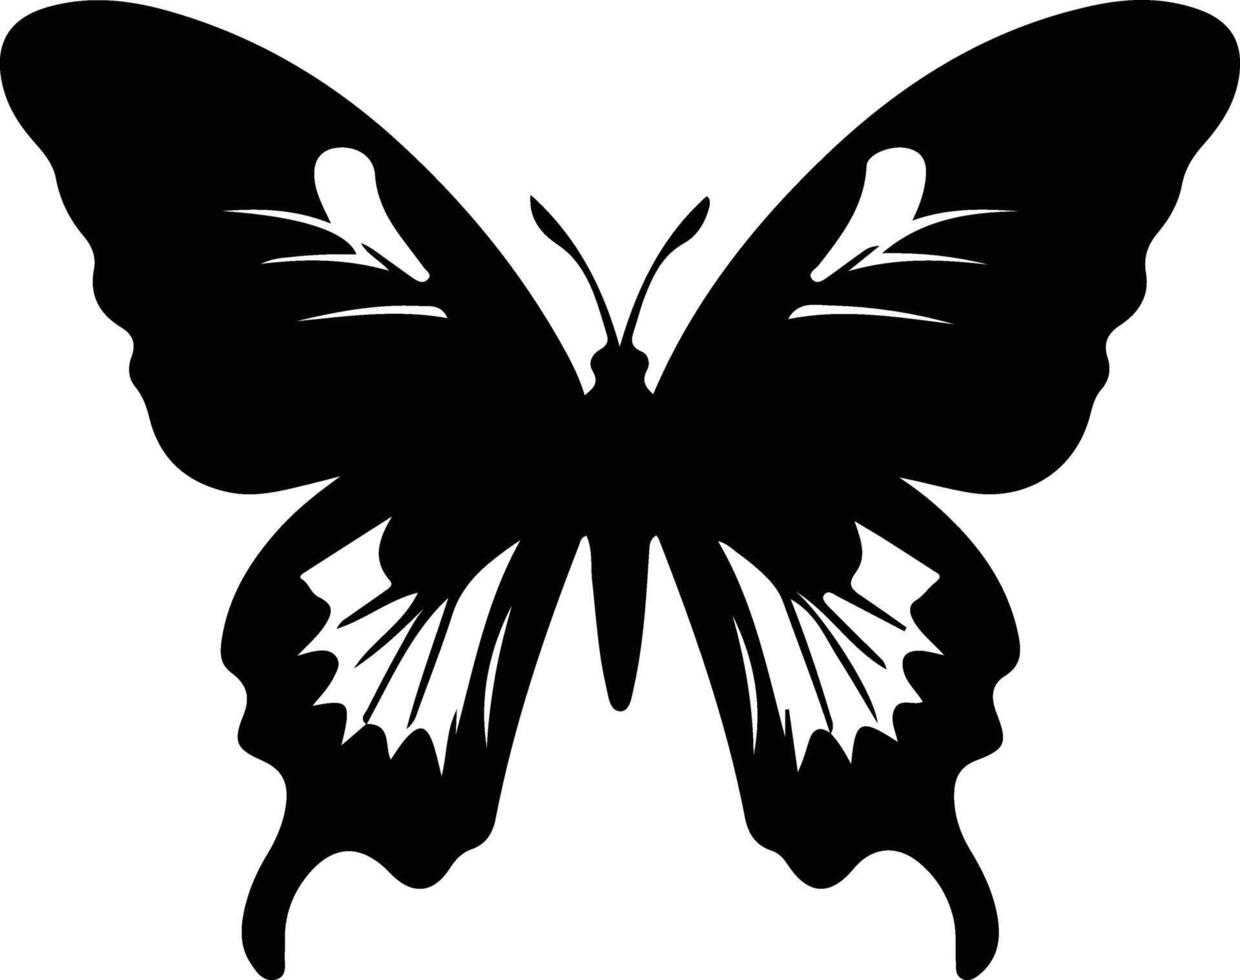 Königin Alexandras Vogel Flügel schwarz Silhouette vektor